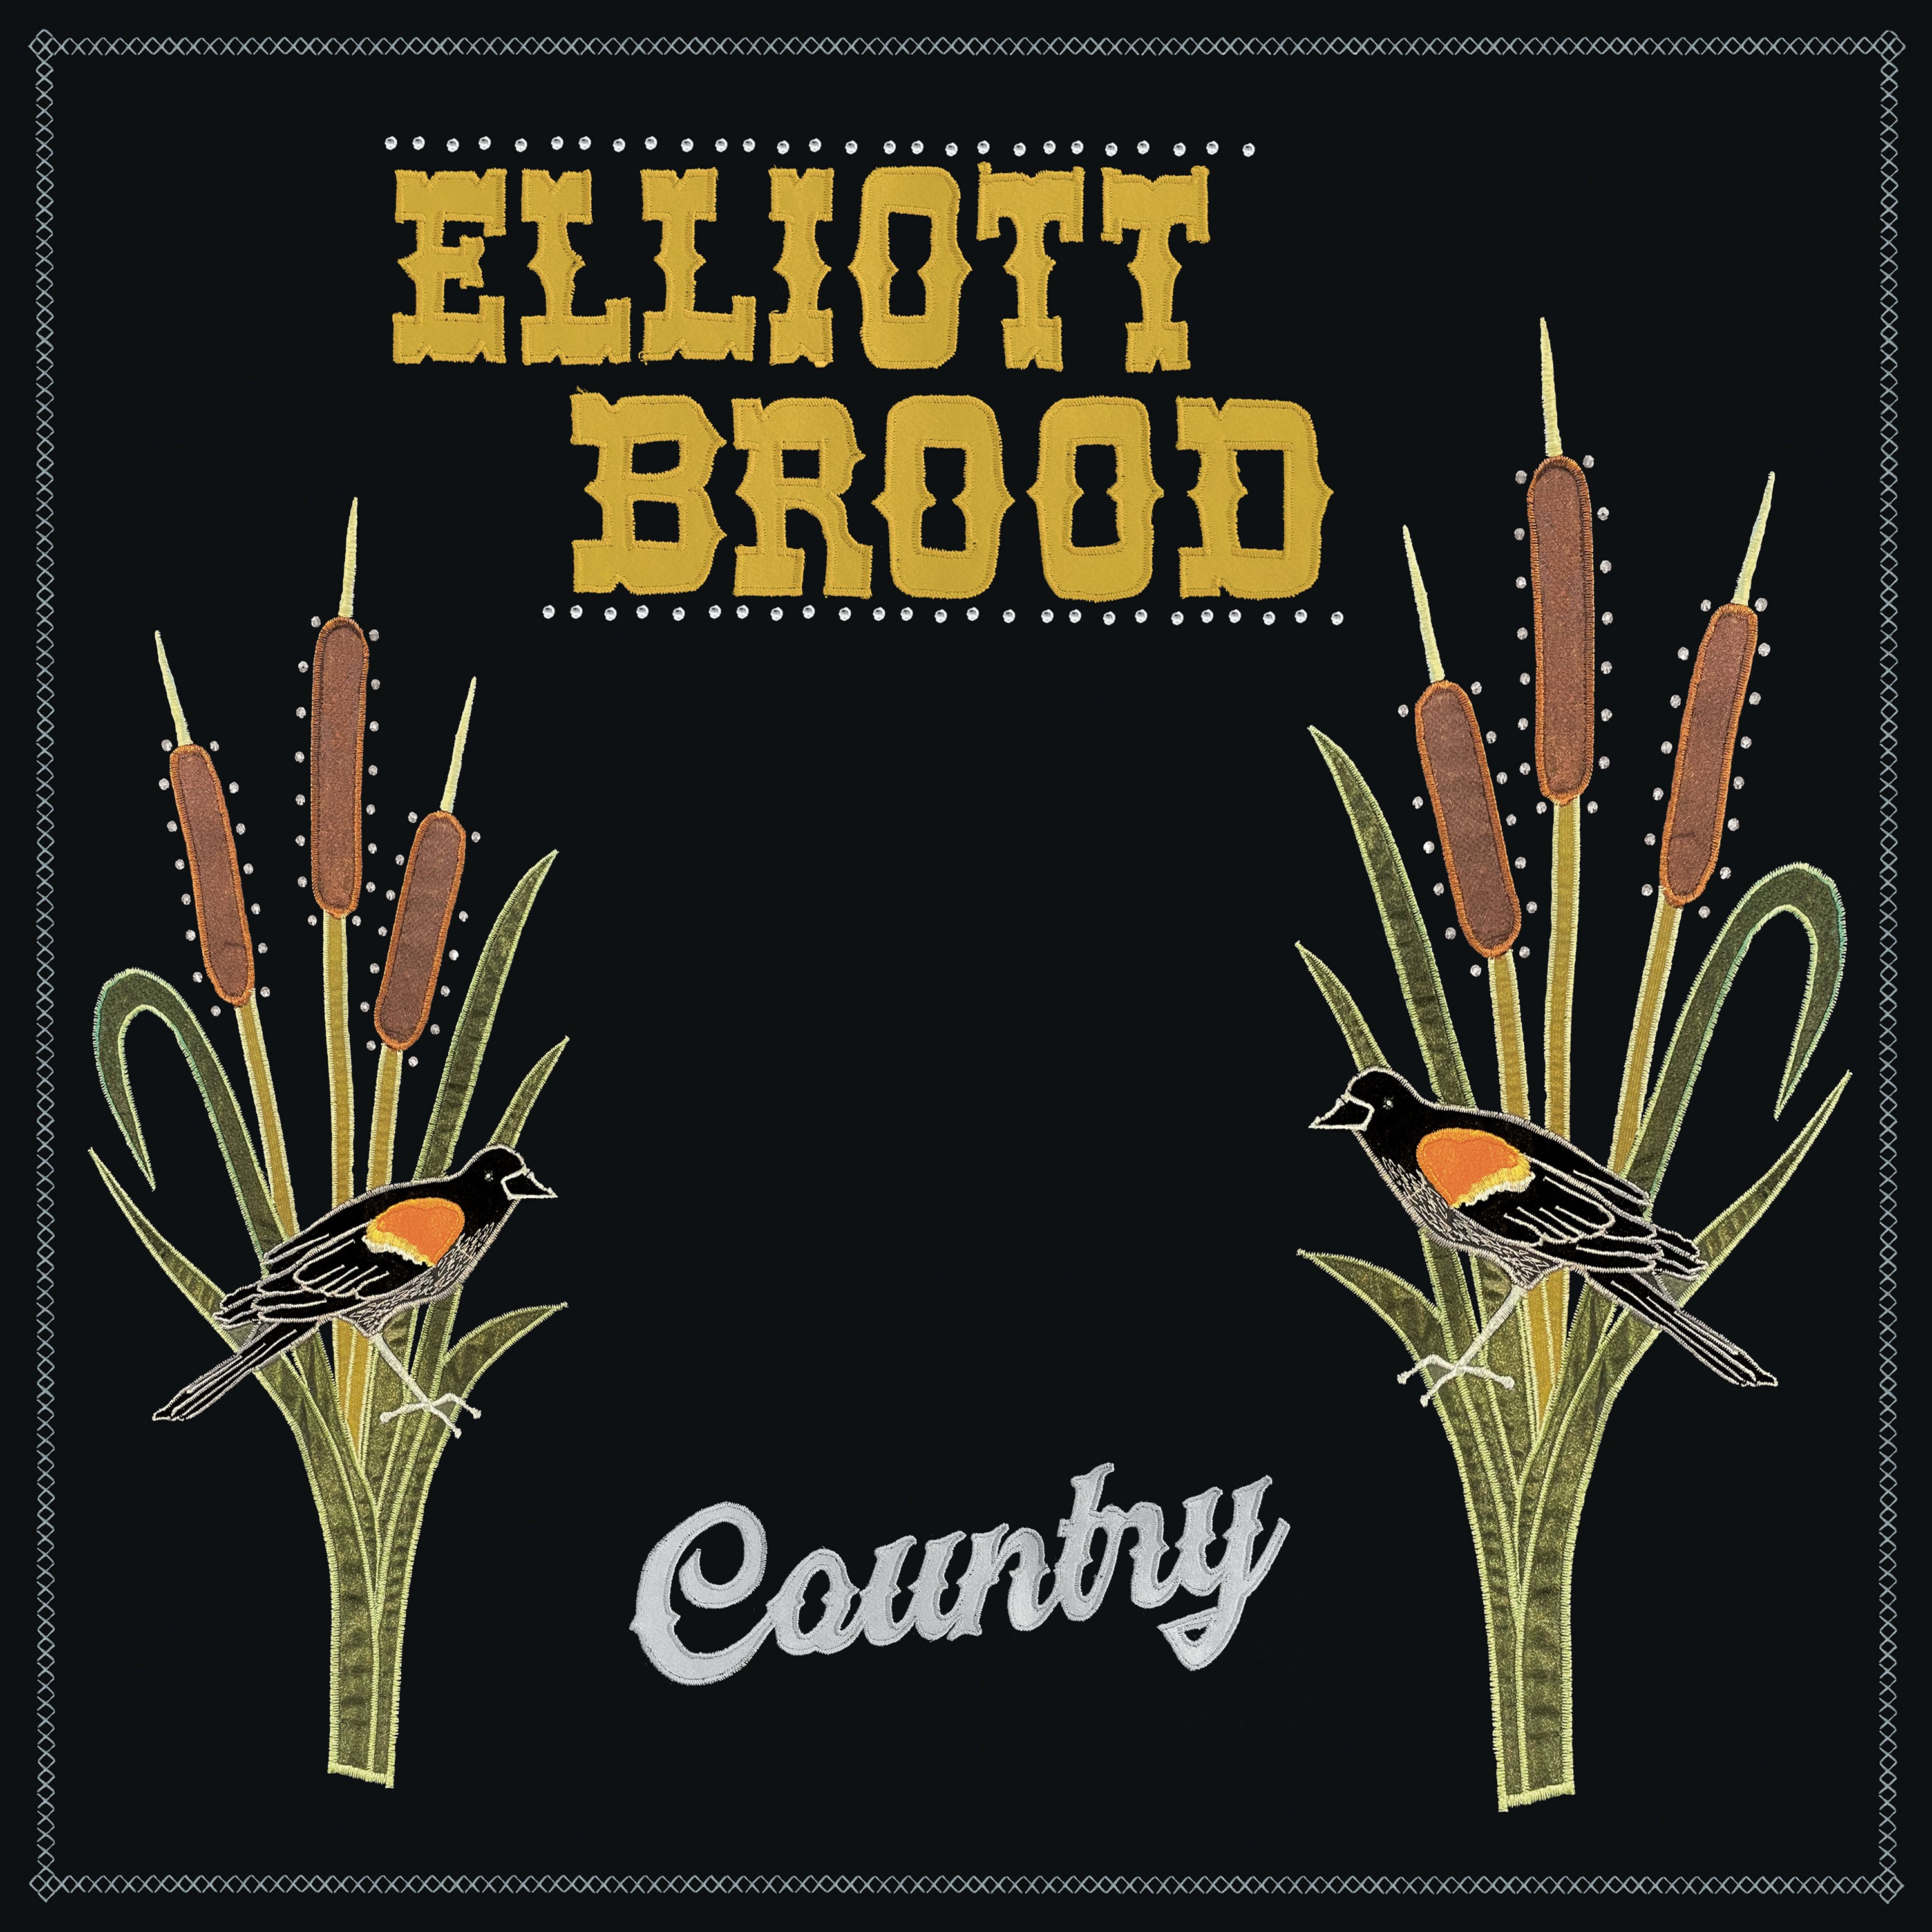 ElliottBROODCountryAlbumCover3000X3000_1.jpg